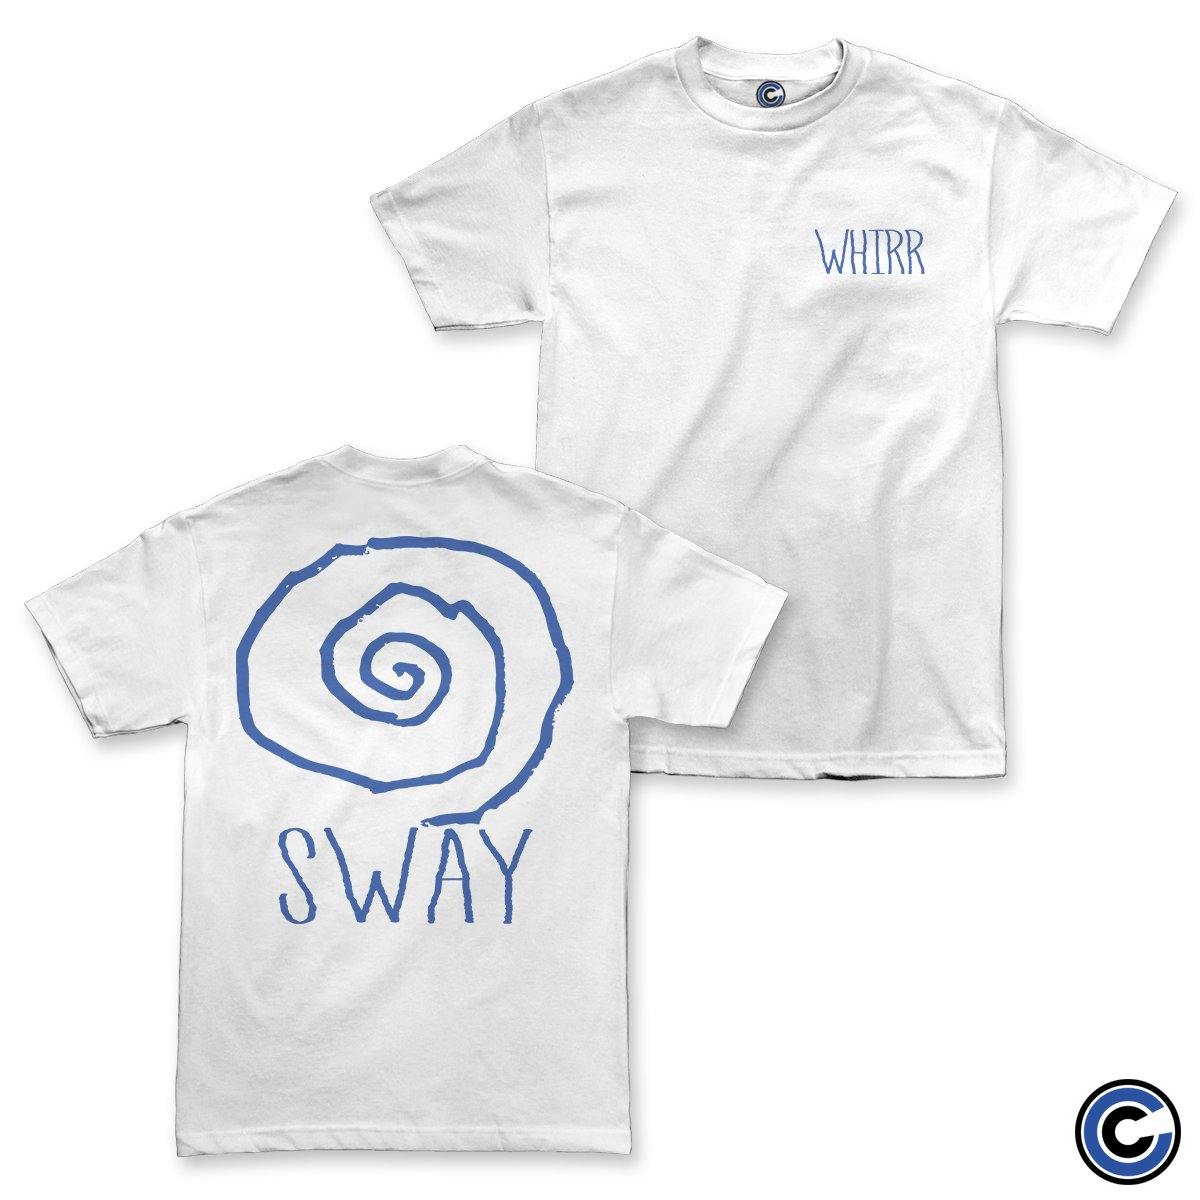 Buy – Whirr "Sway" Shirt – Band & Music Merch – Cold Cuts Merch